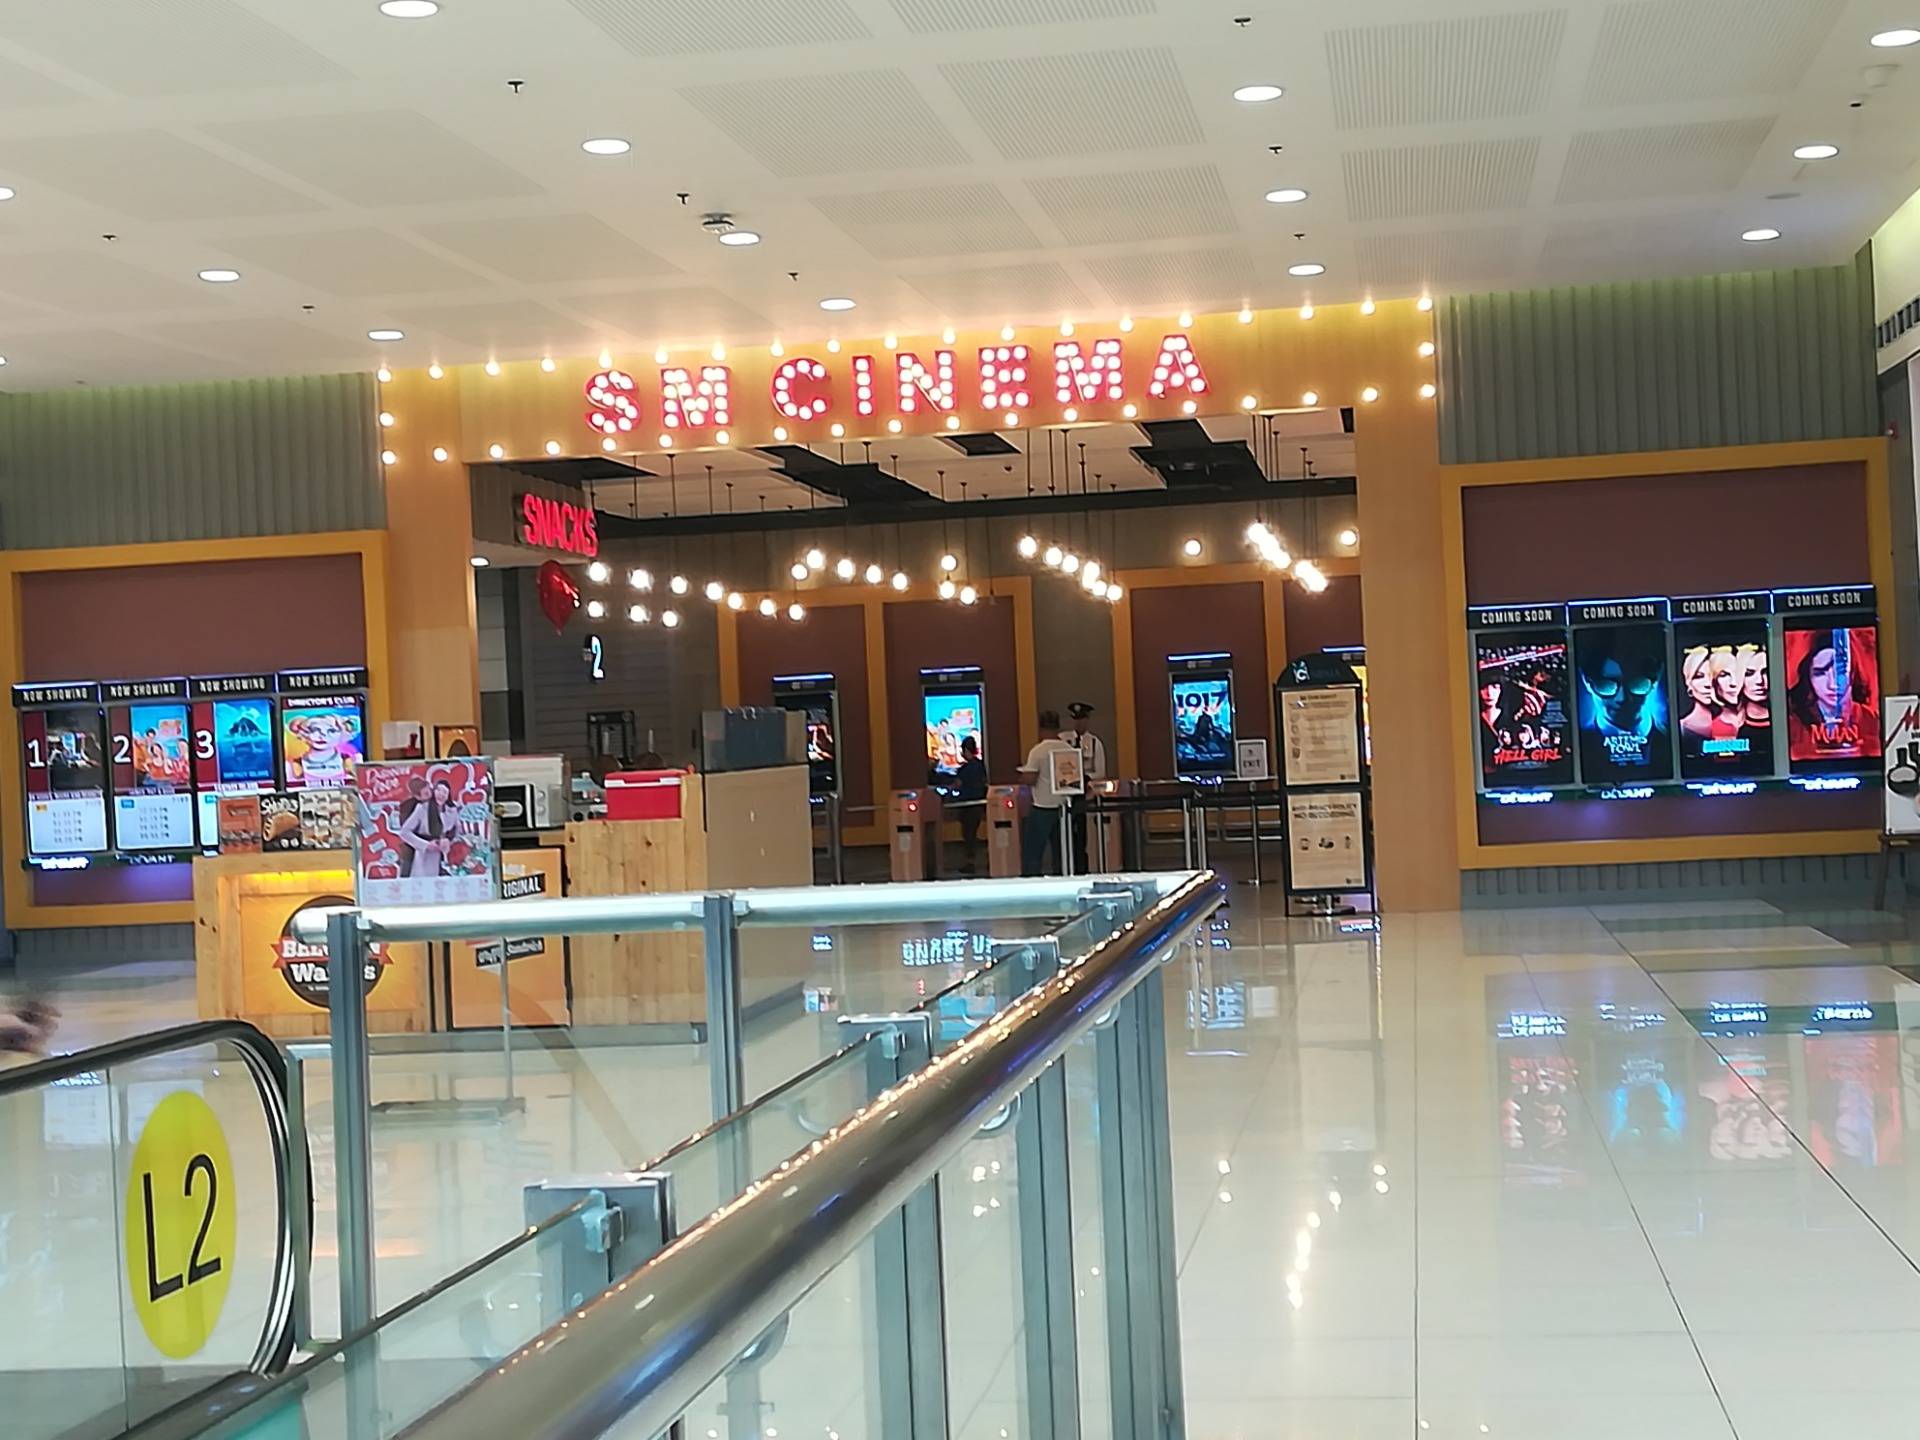 the cinema